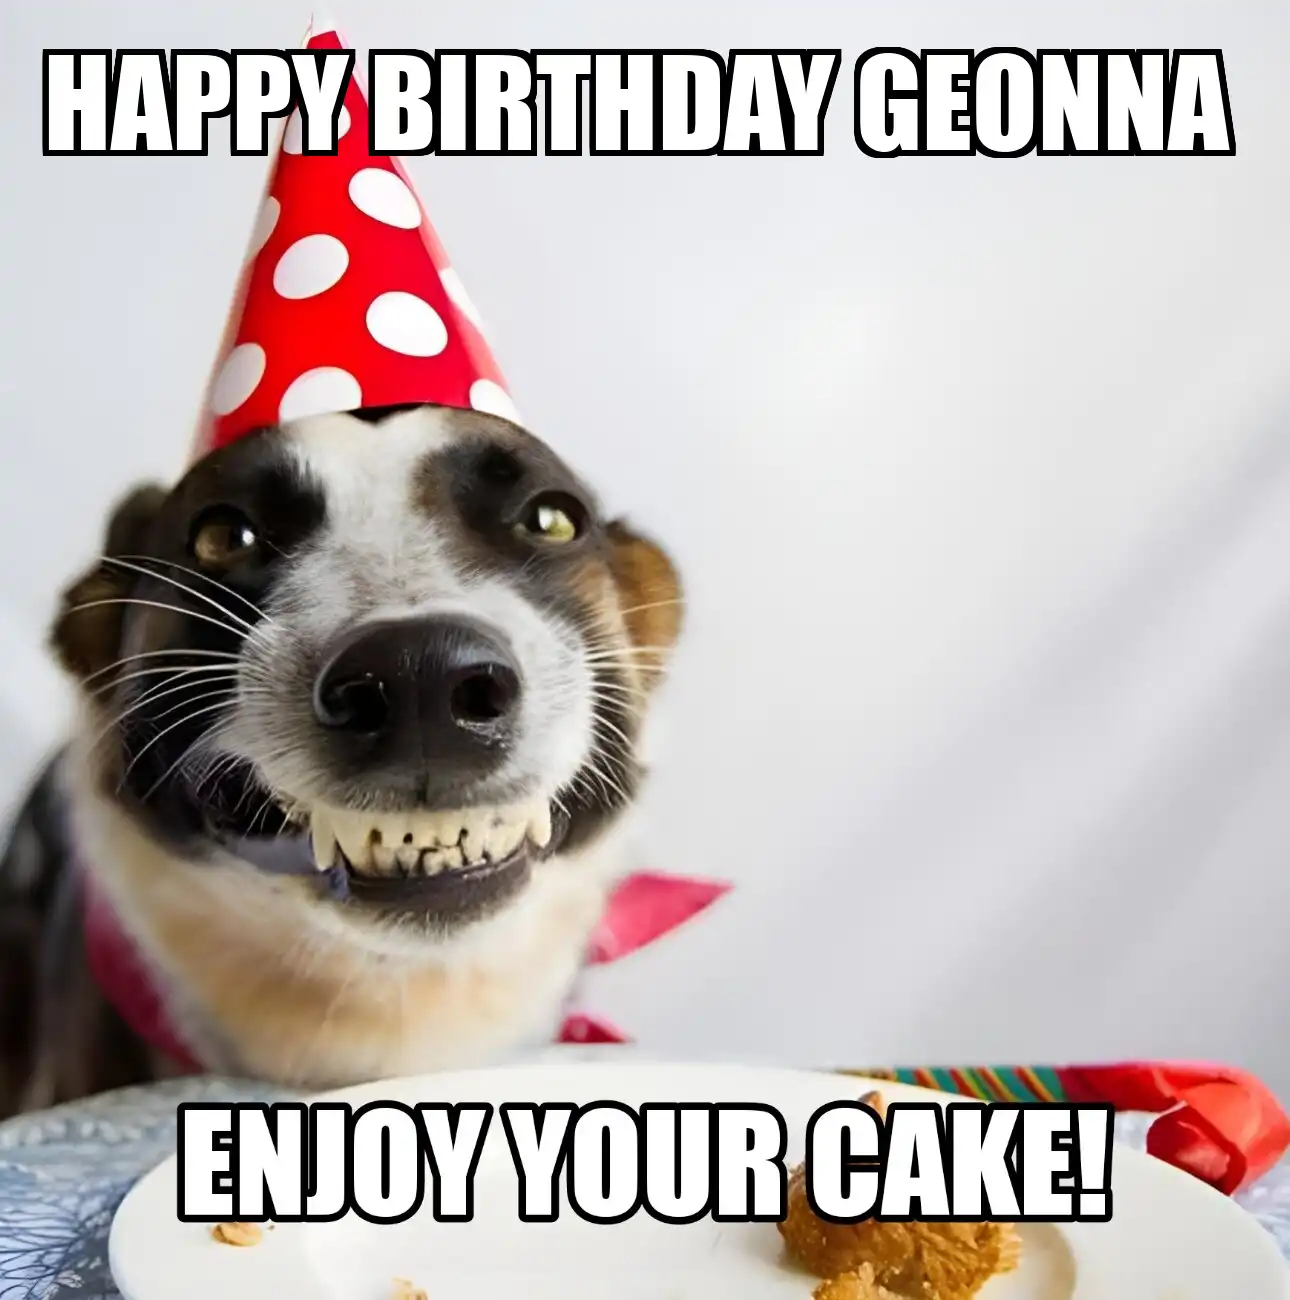 Happy Birthday Geonna Enjoy Your Cake Dog Meme